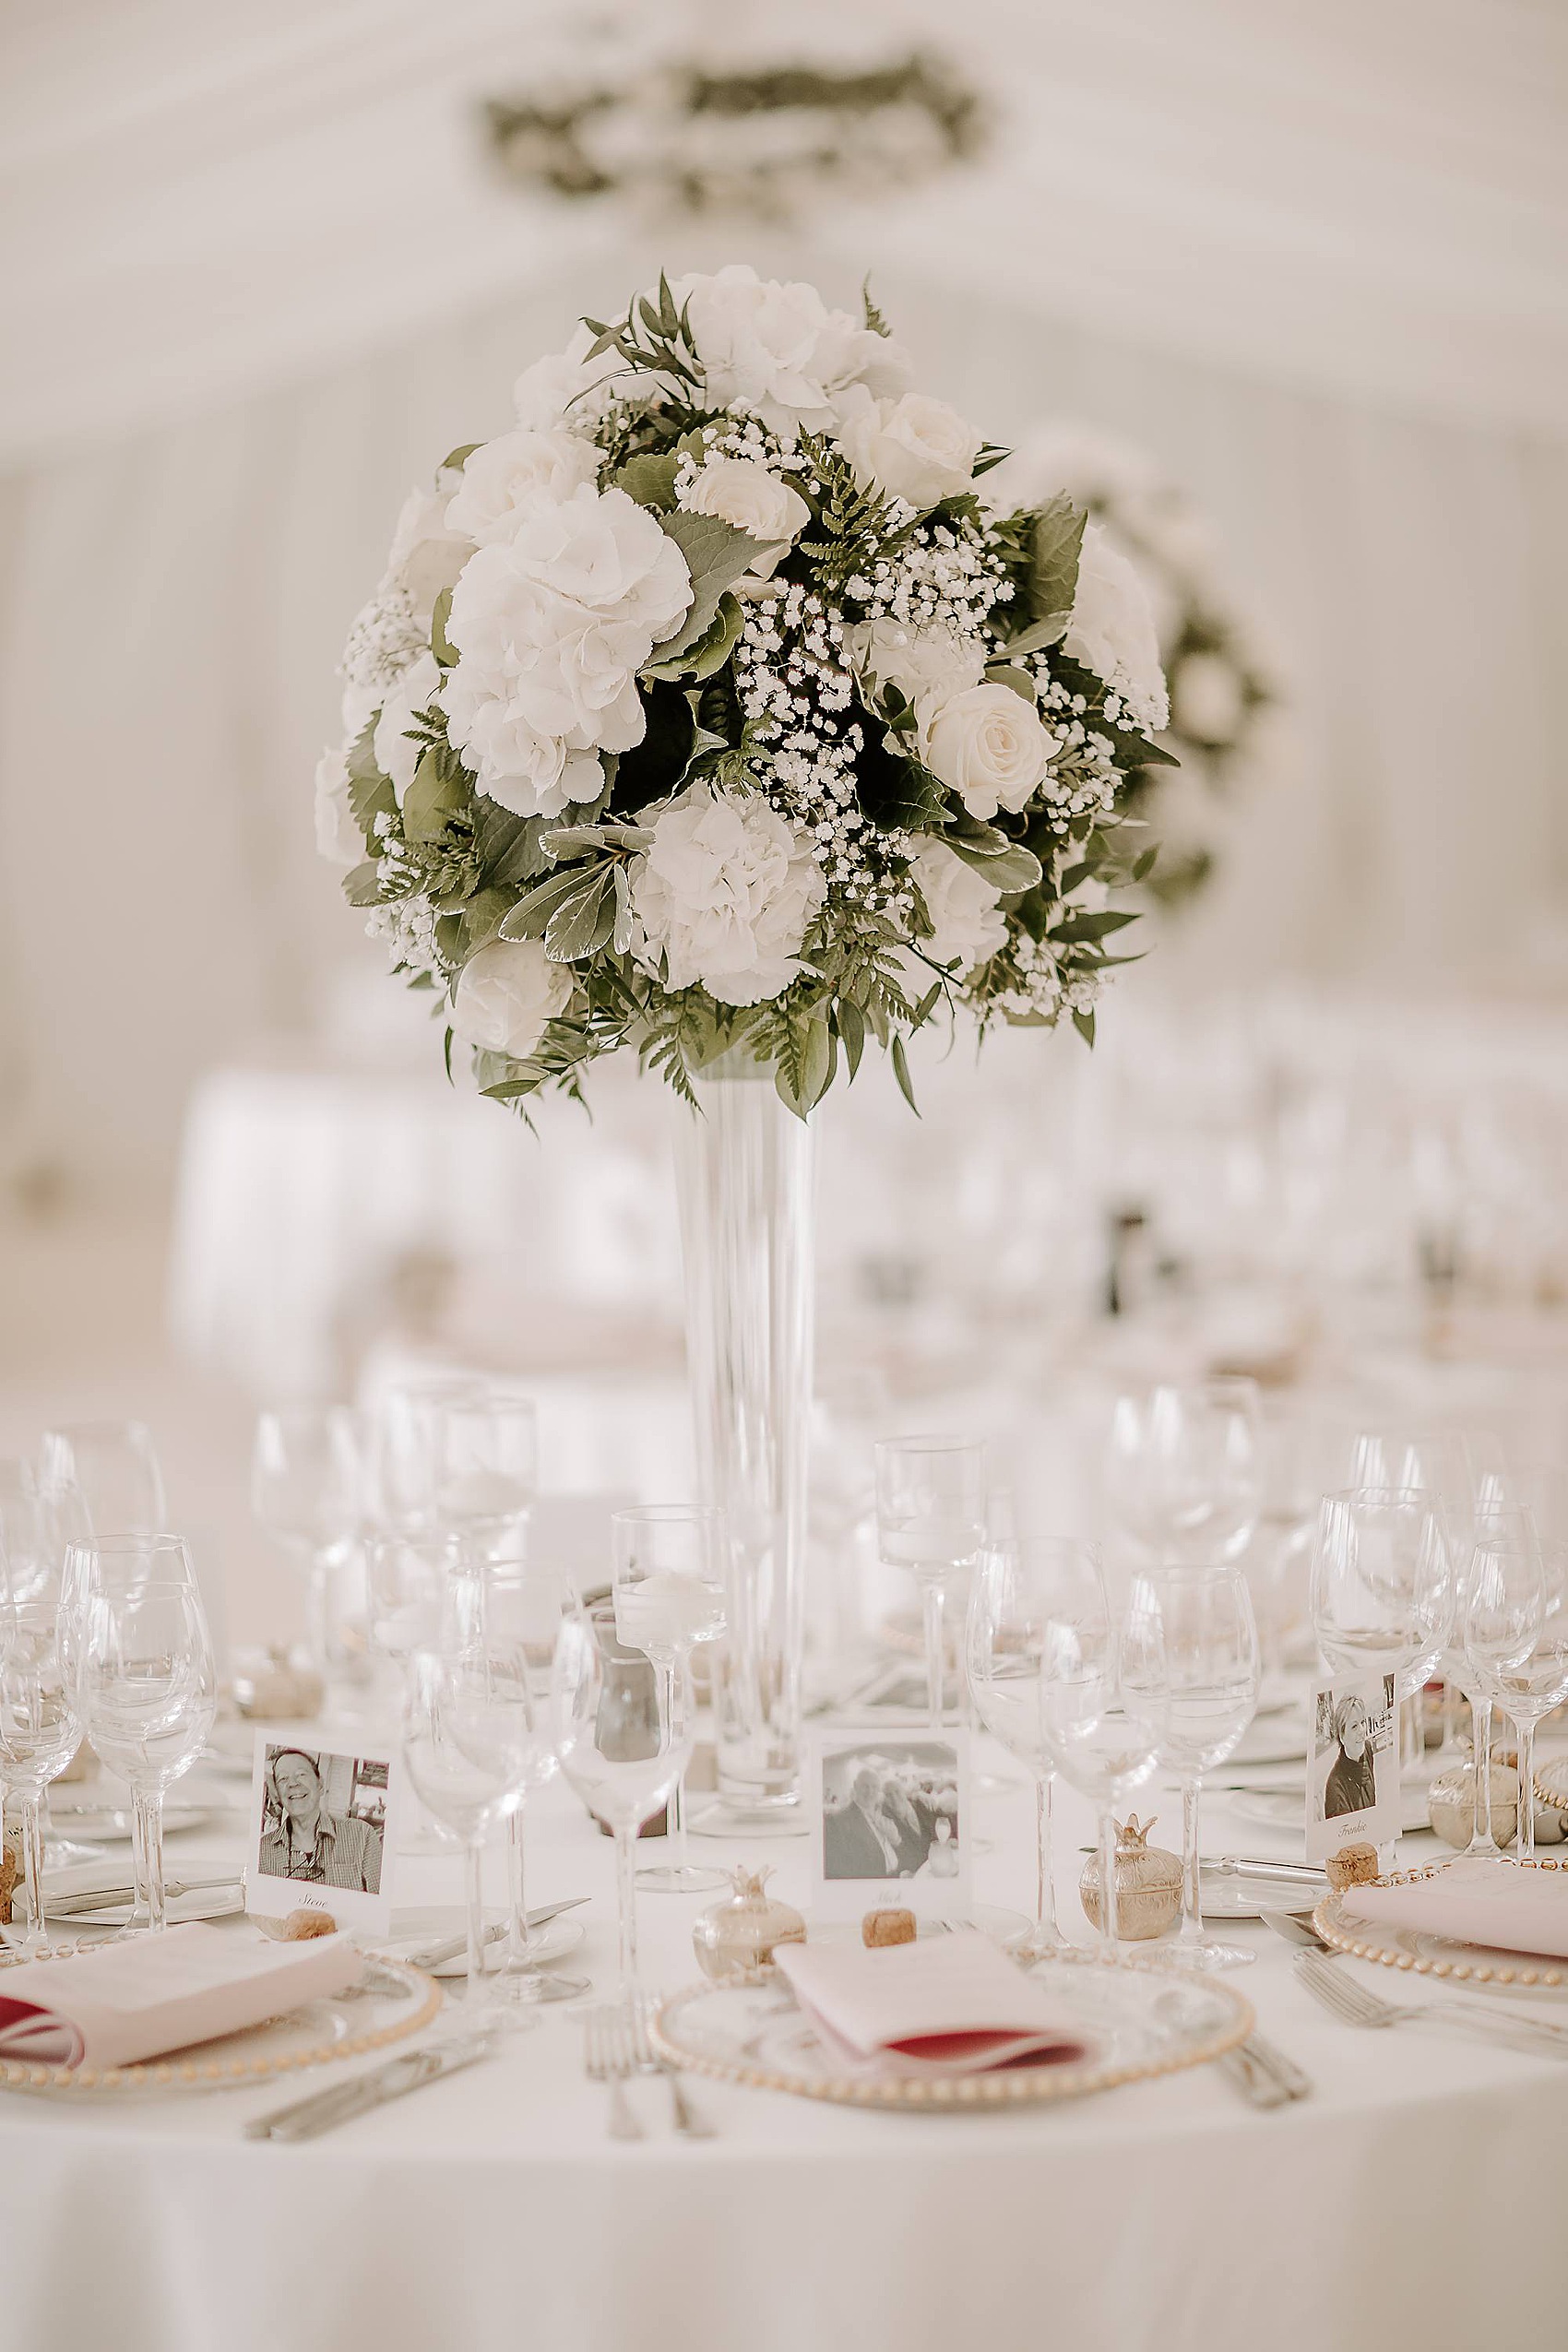 White wedding flowers table centrepiece